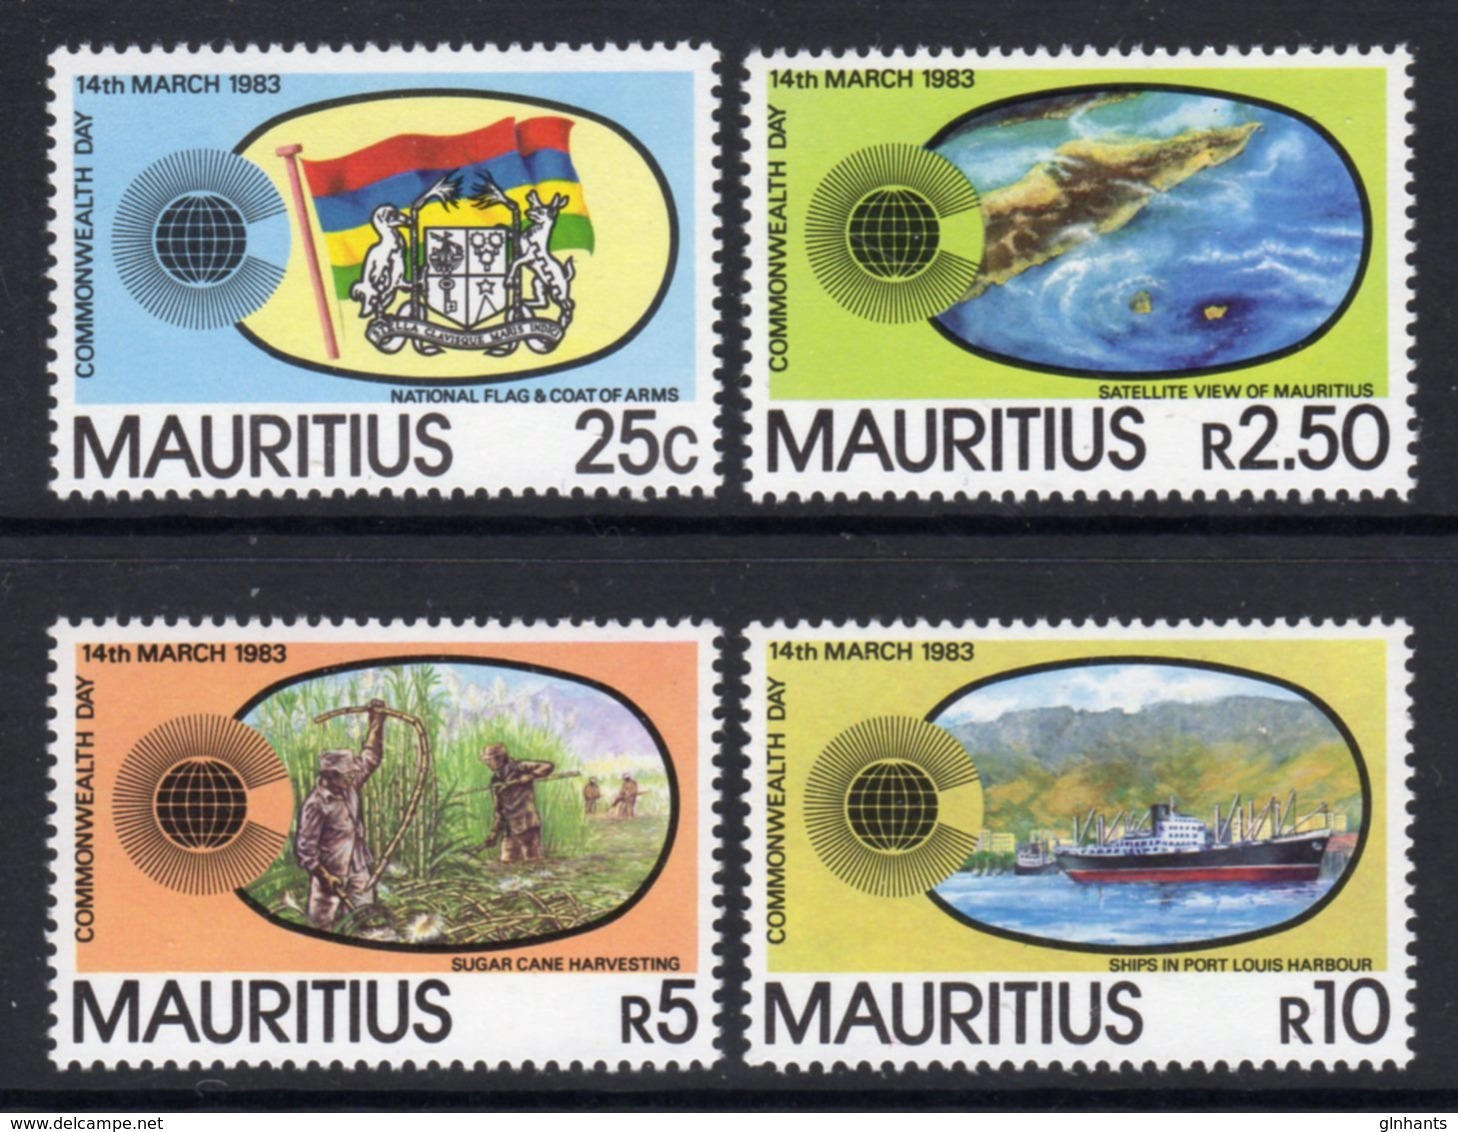 MAURITIUS - 1983 COMMONWEALTH DAY SET (4V) FINE MNH ** SG 653-656 - Mauritius (1968-...)